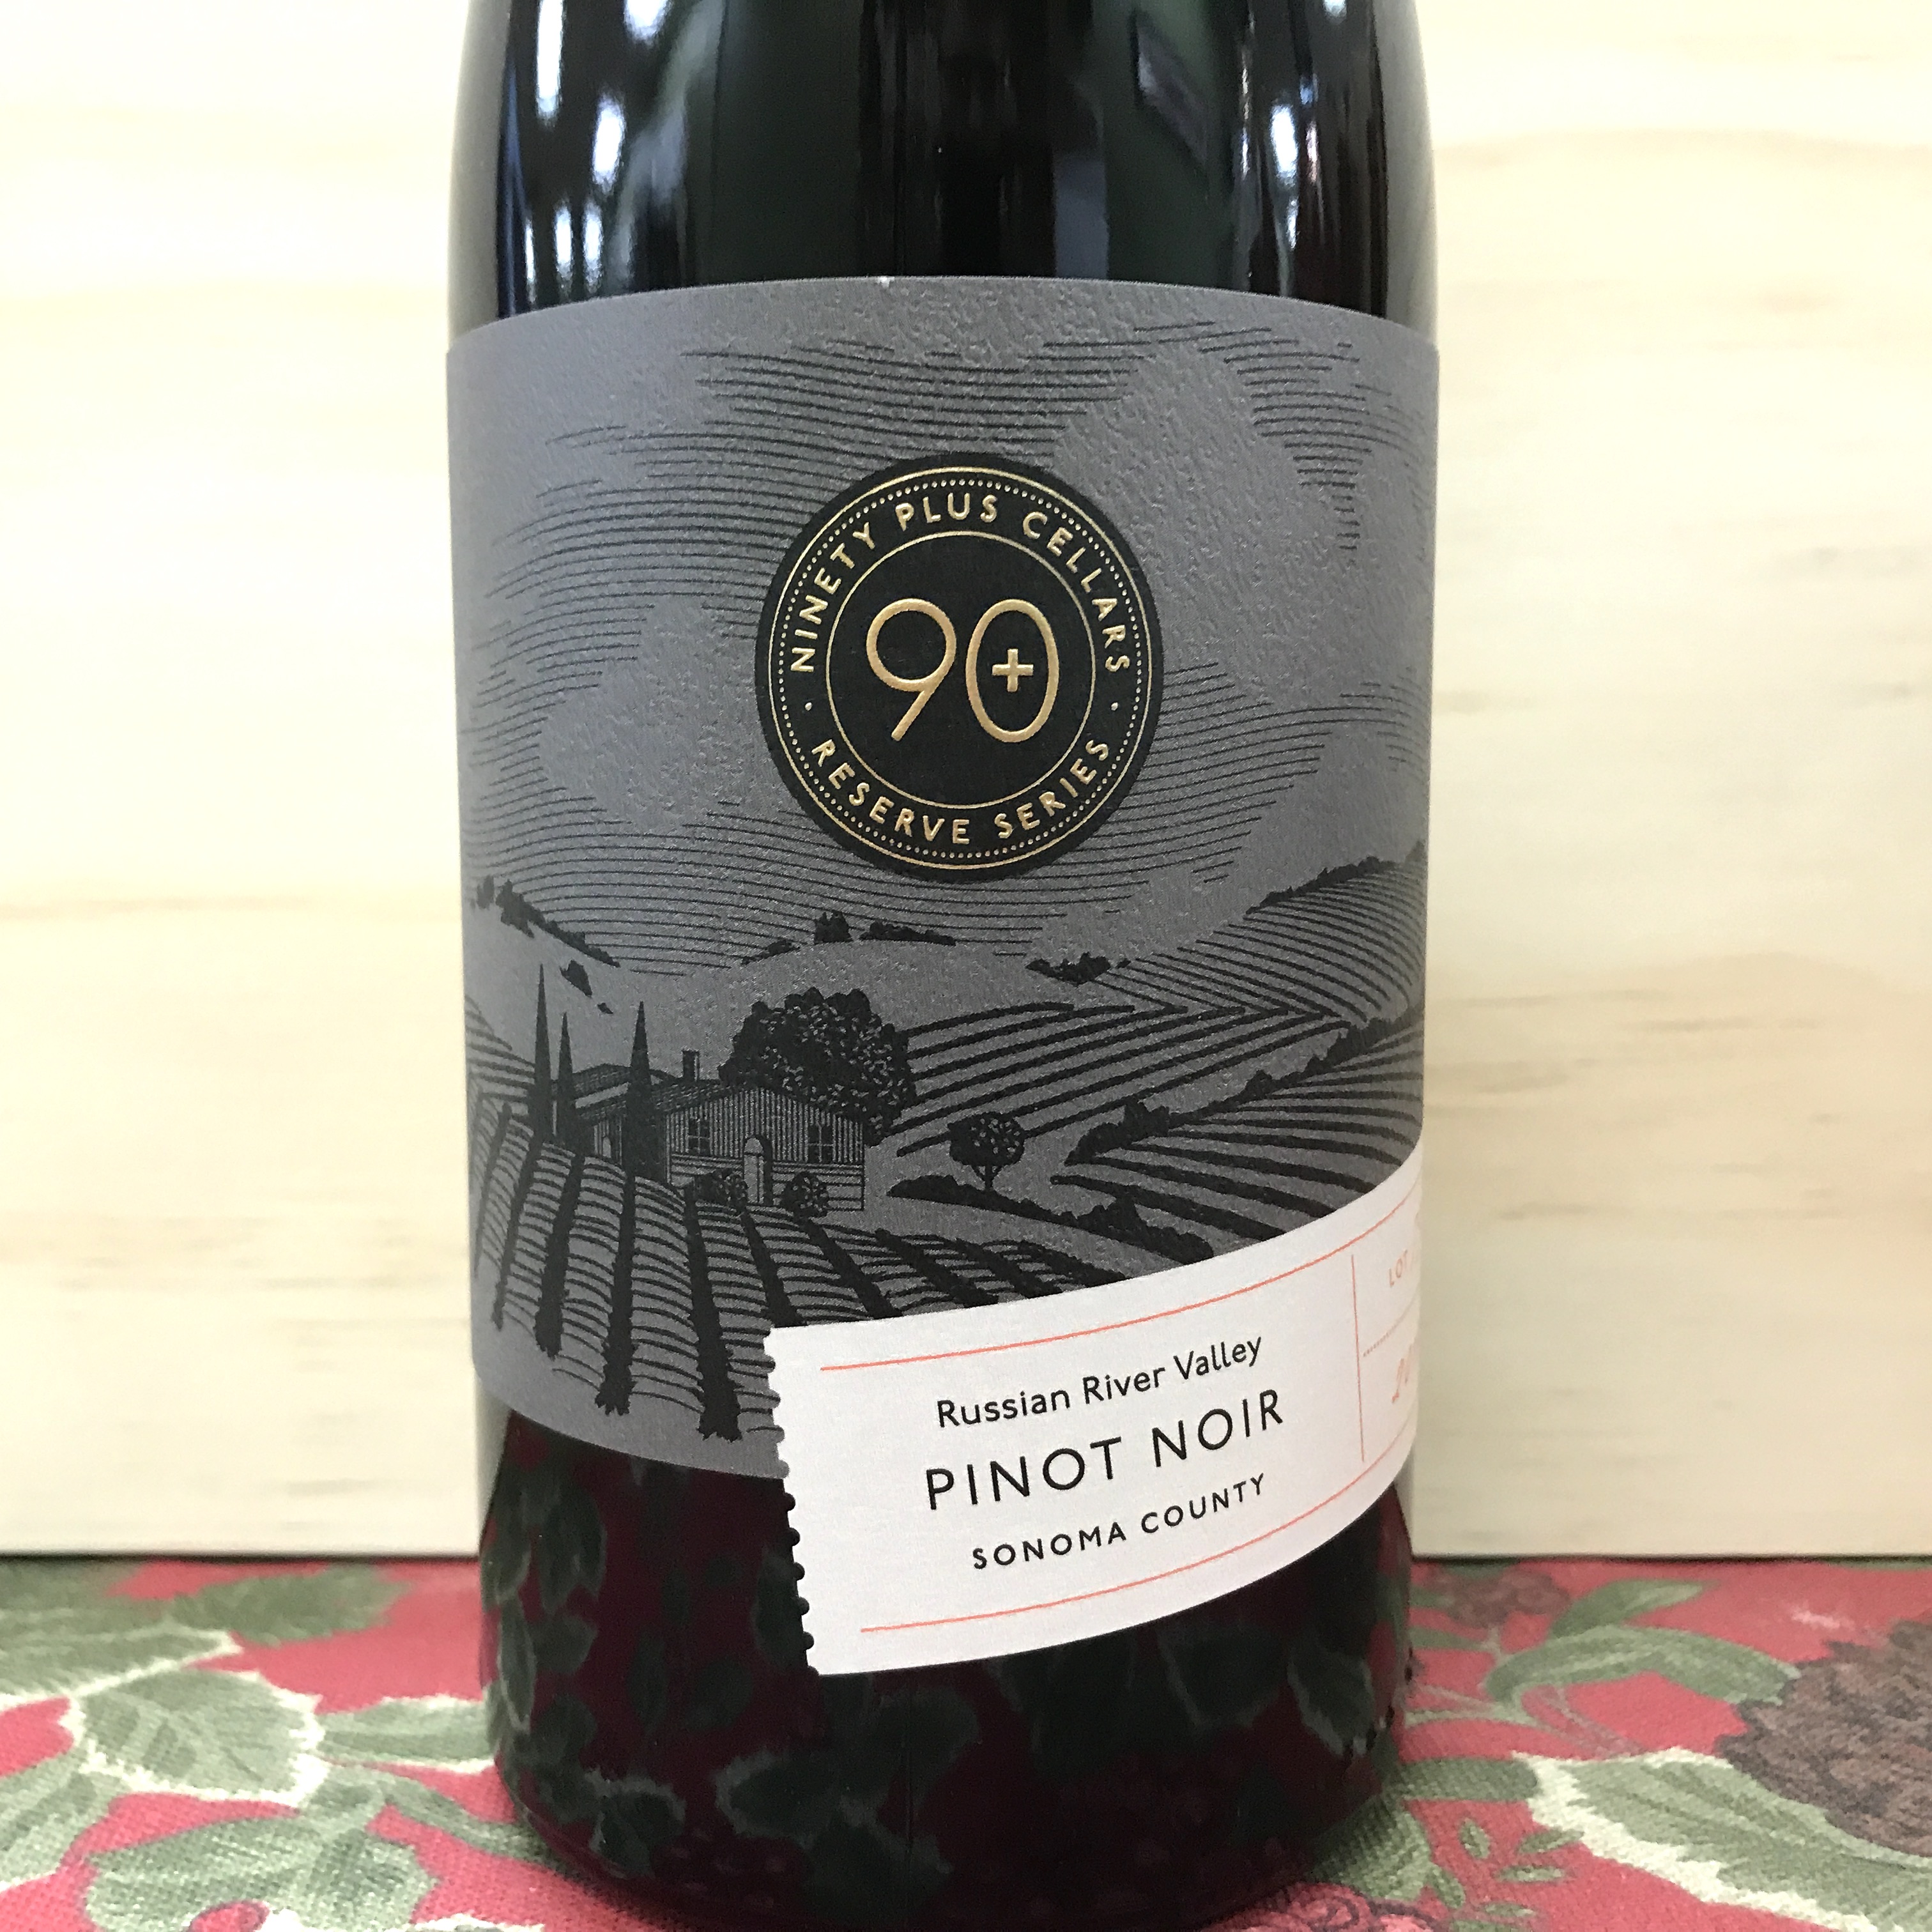 90+ Cellars Russian River Lot 75 Pinot Noir 2019